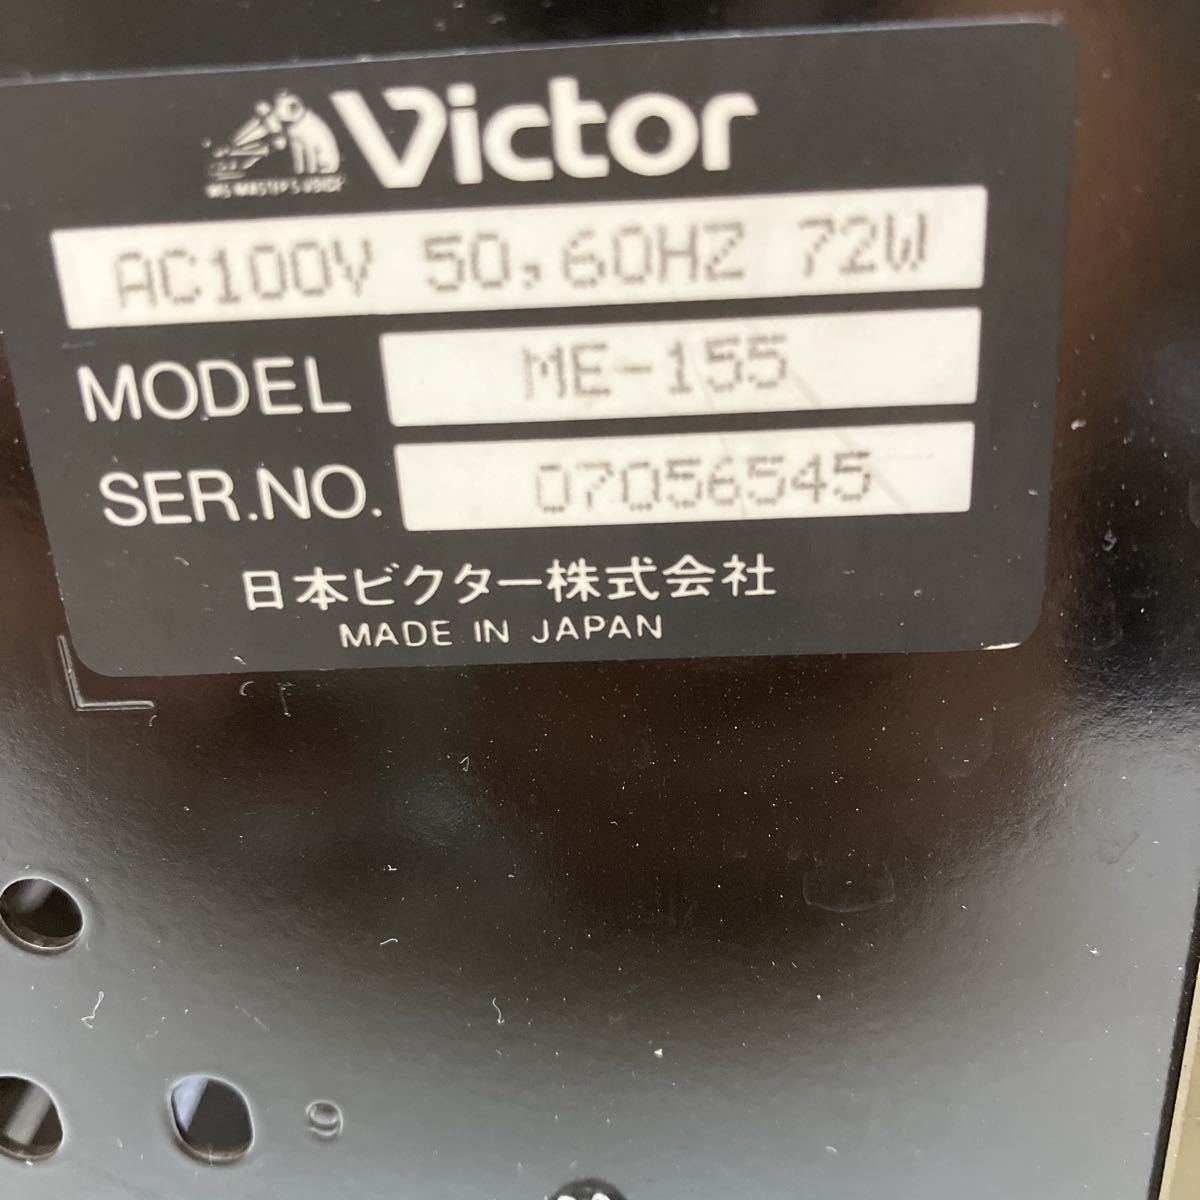 XL8293 * Victor Victor* power amplifier *ME-155* electrification verification 